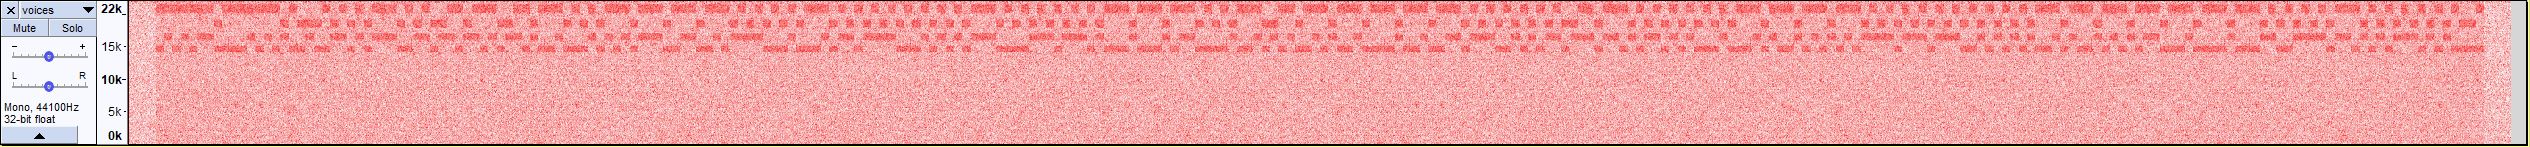 Spectogram Pattern 1